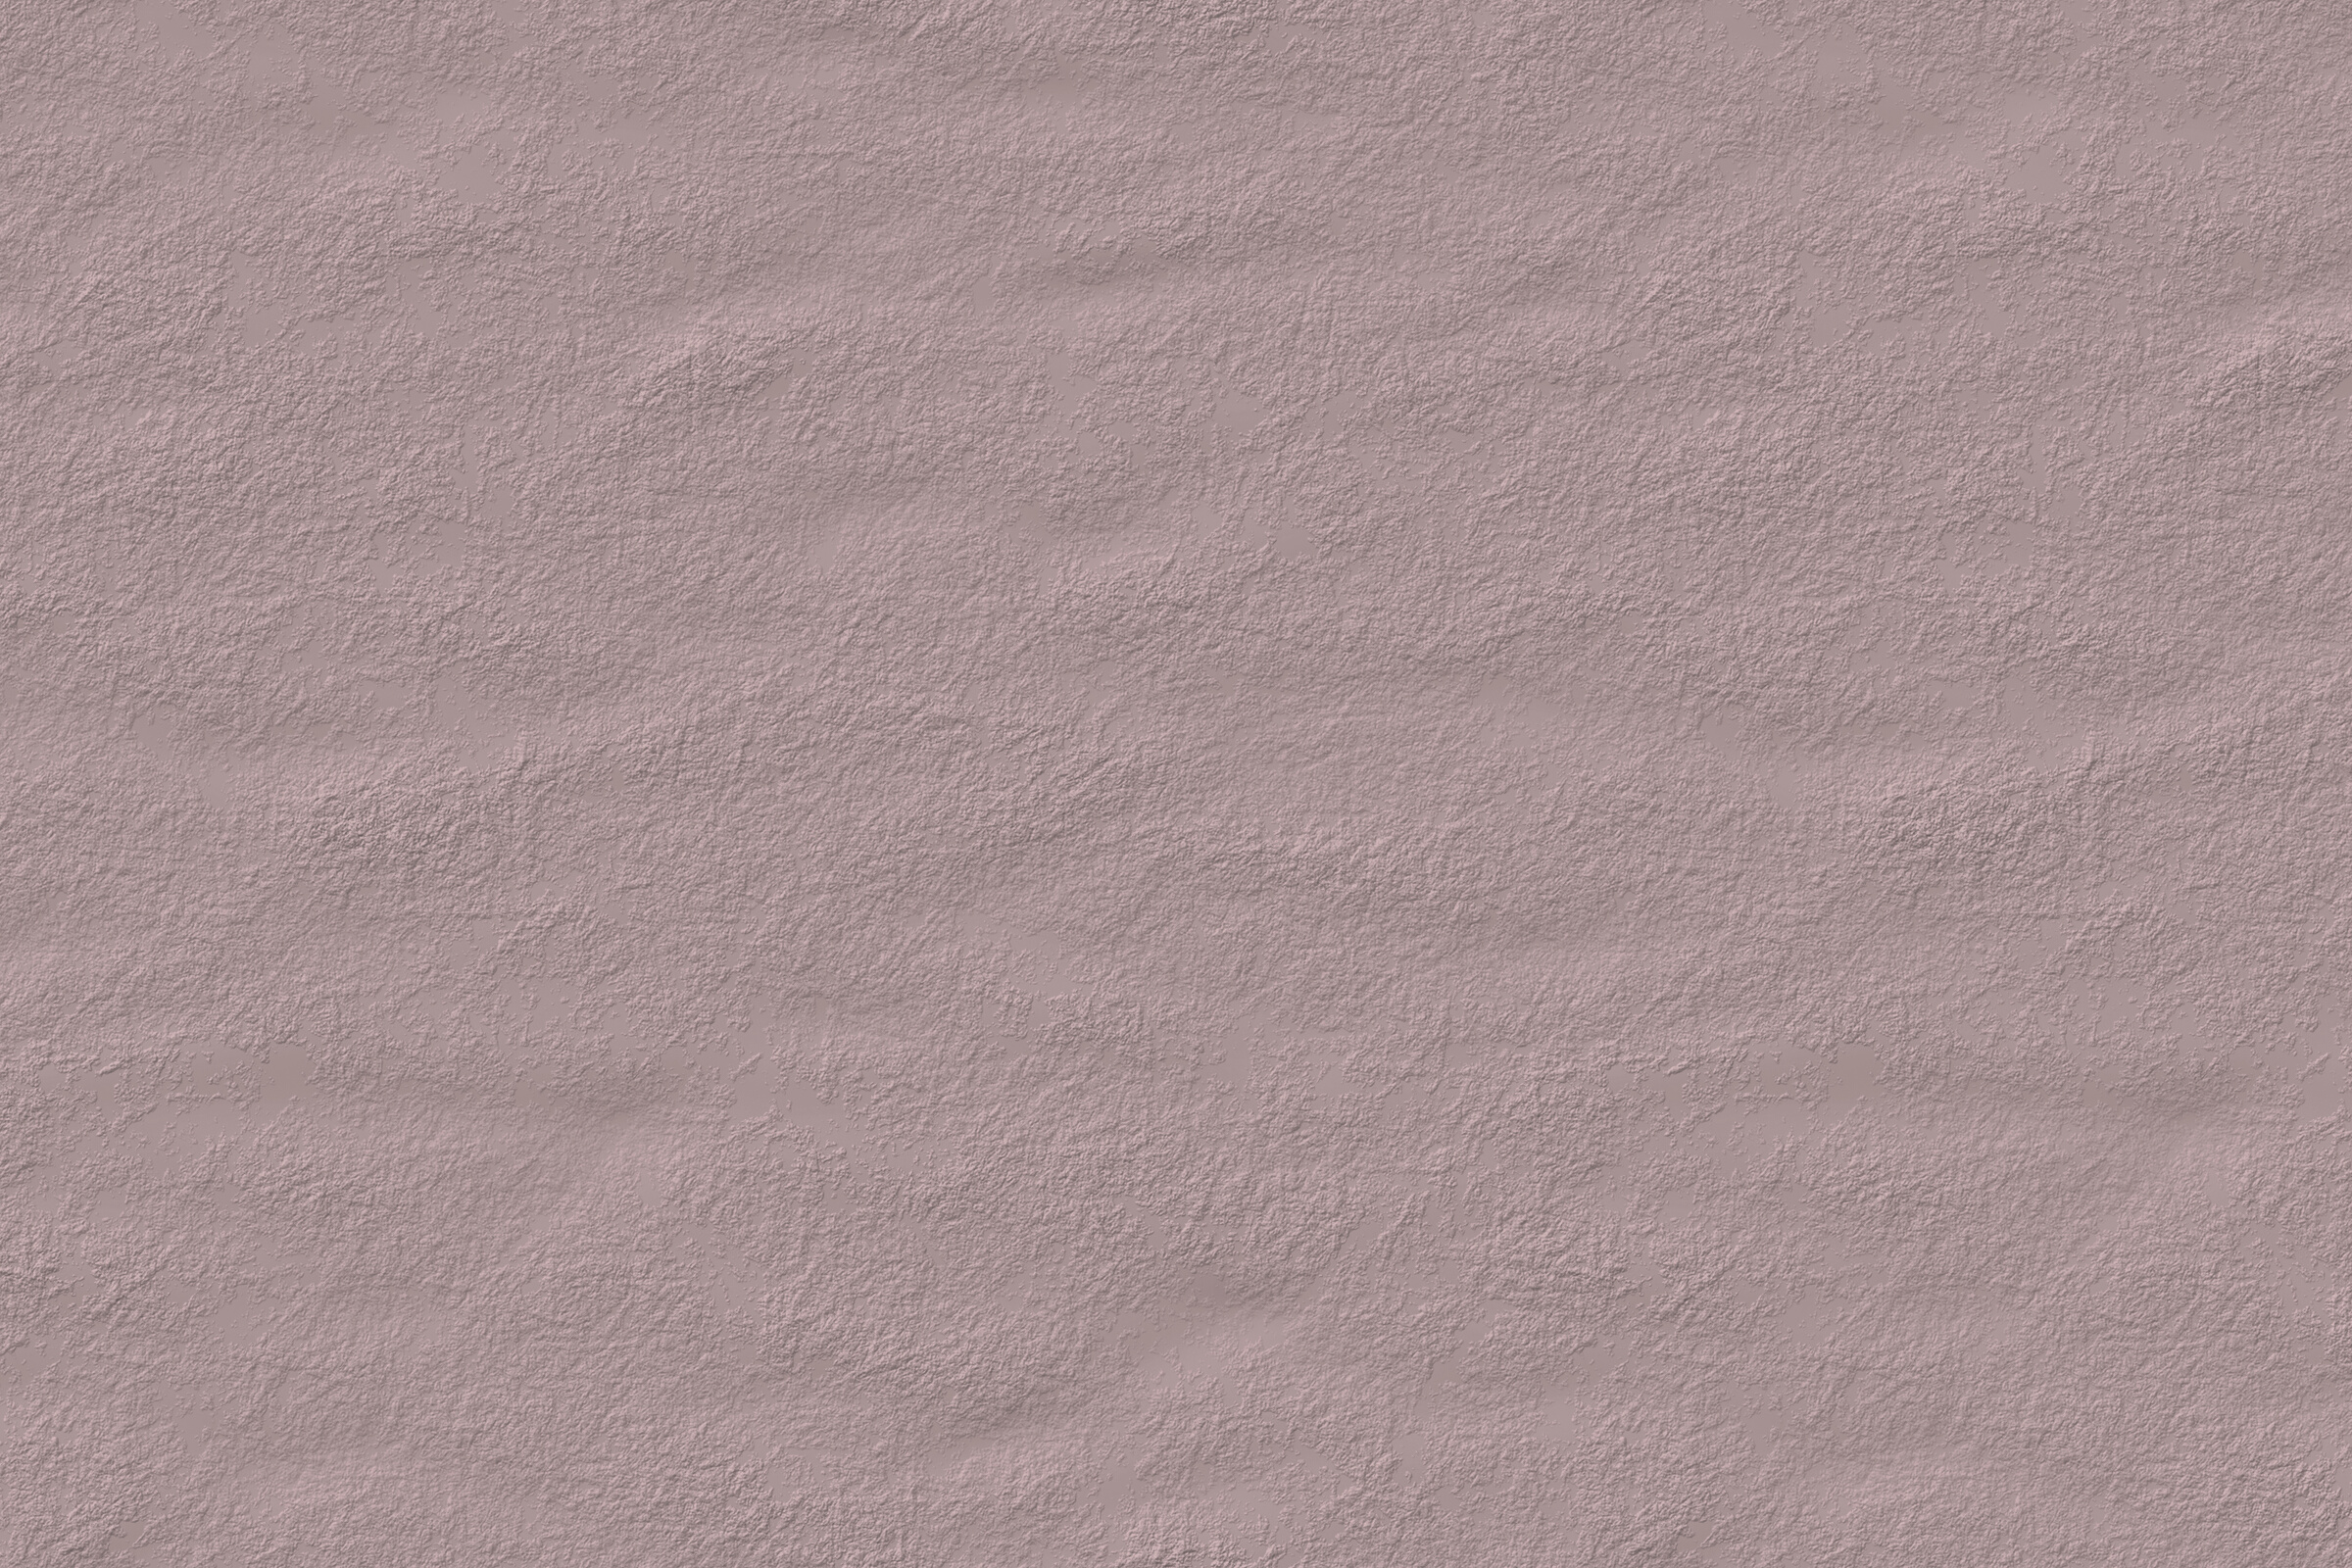 Dusty rose color texture, rough 3d background